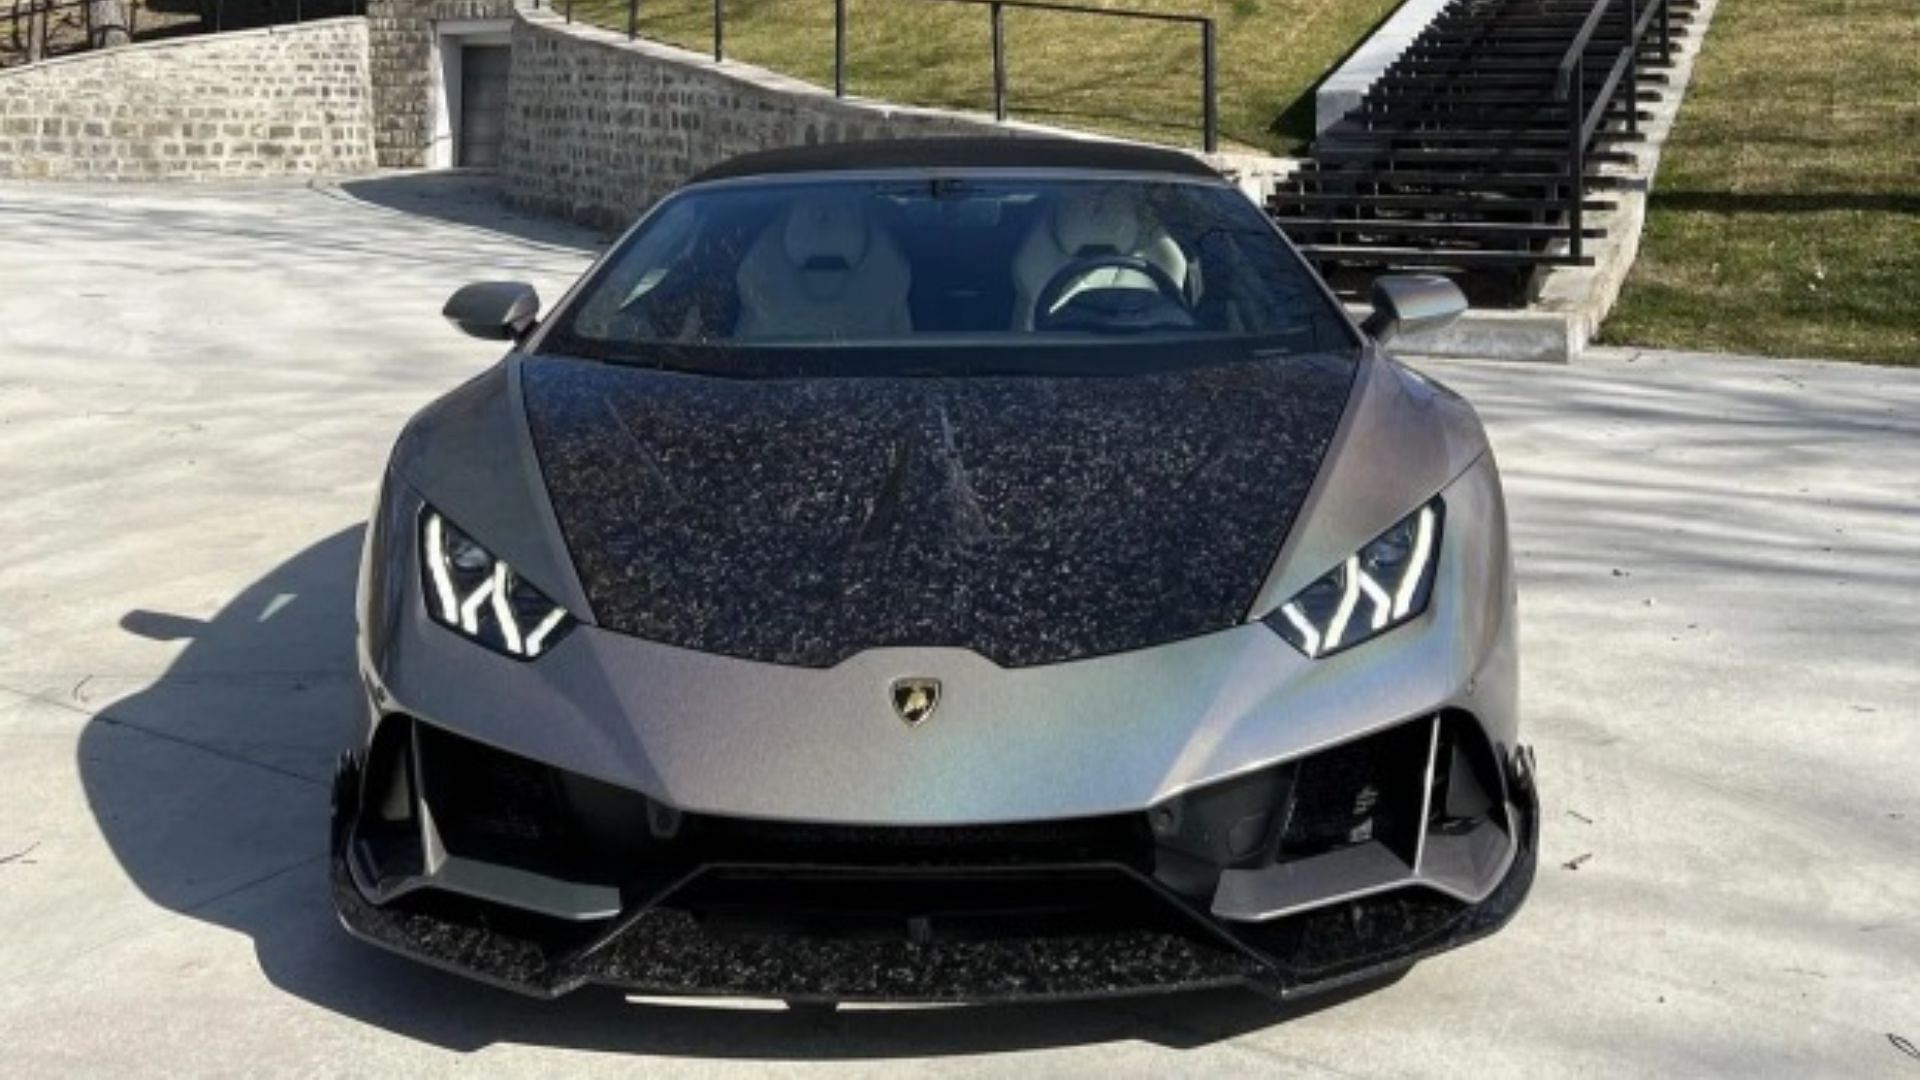 Tate's black and silver Lamborghini Huracan Spyder worth $225,000 (Image via Instagram)